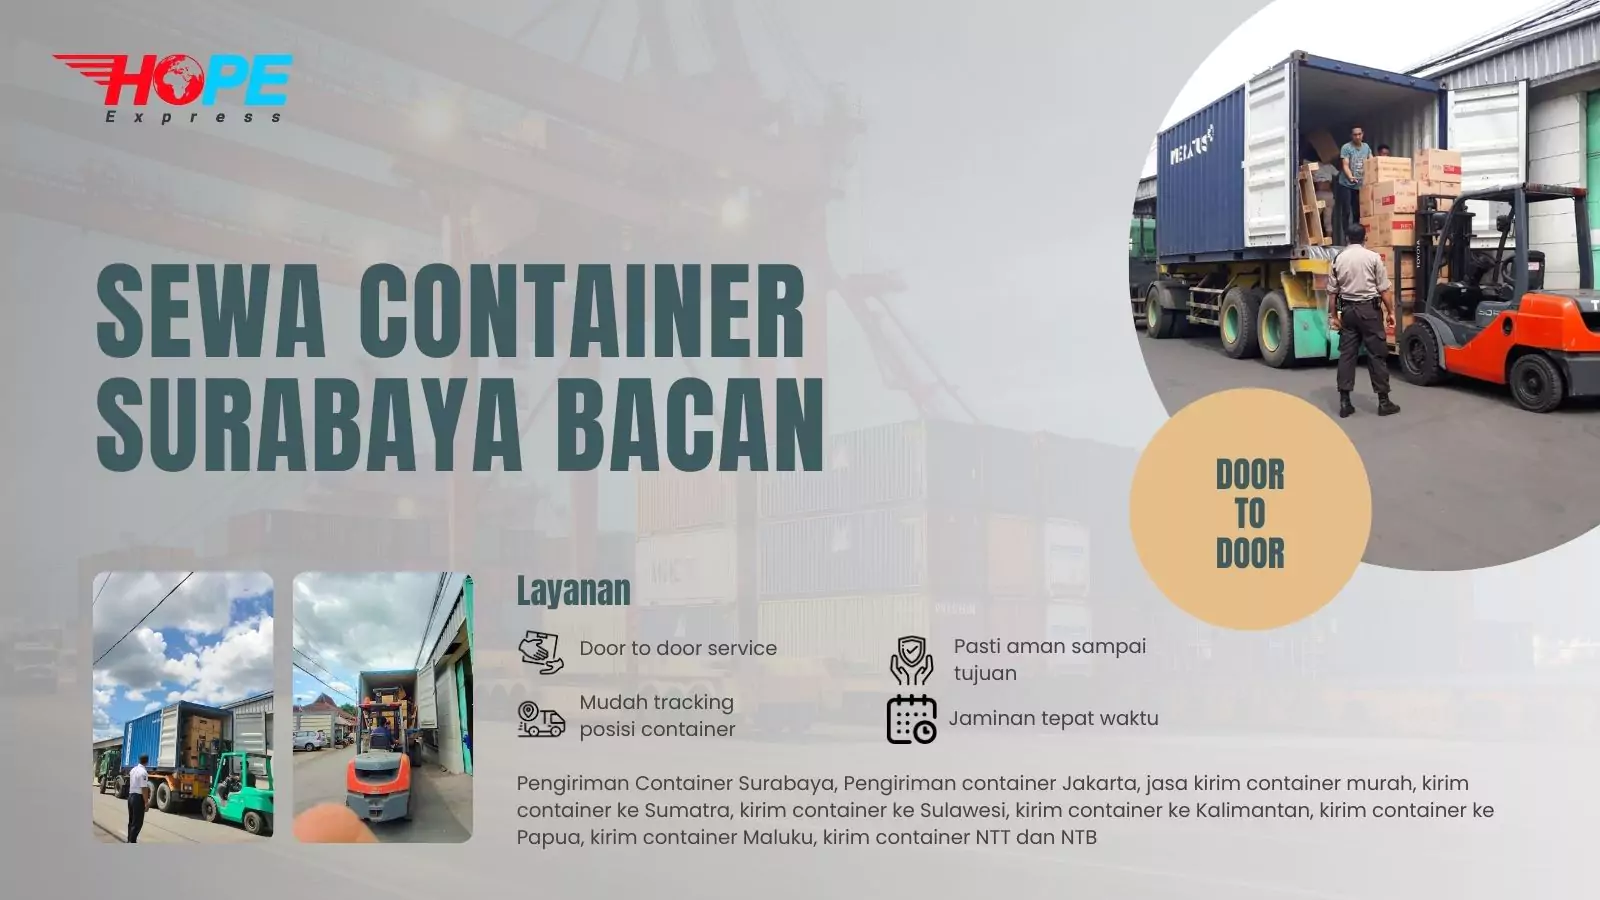 Sewa Container Surabaya Bacan